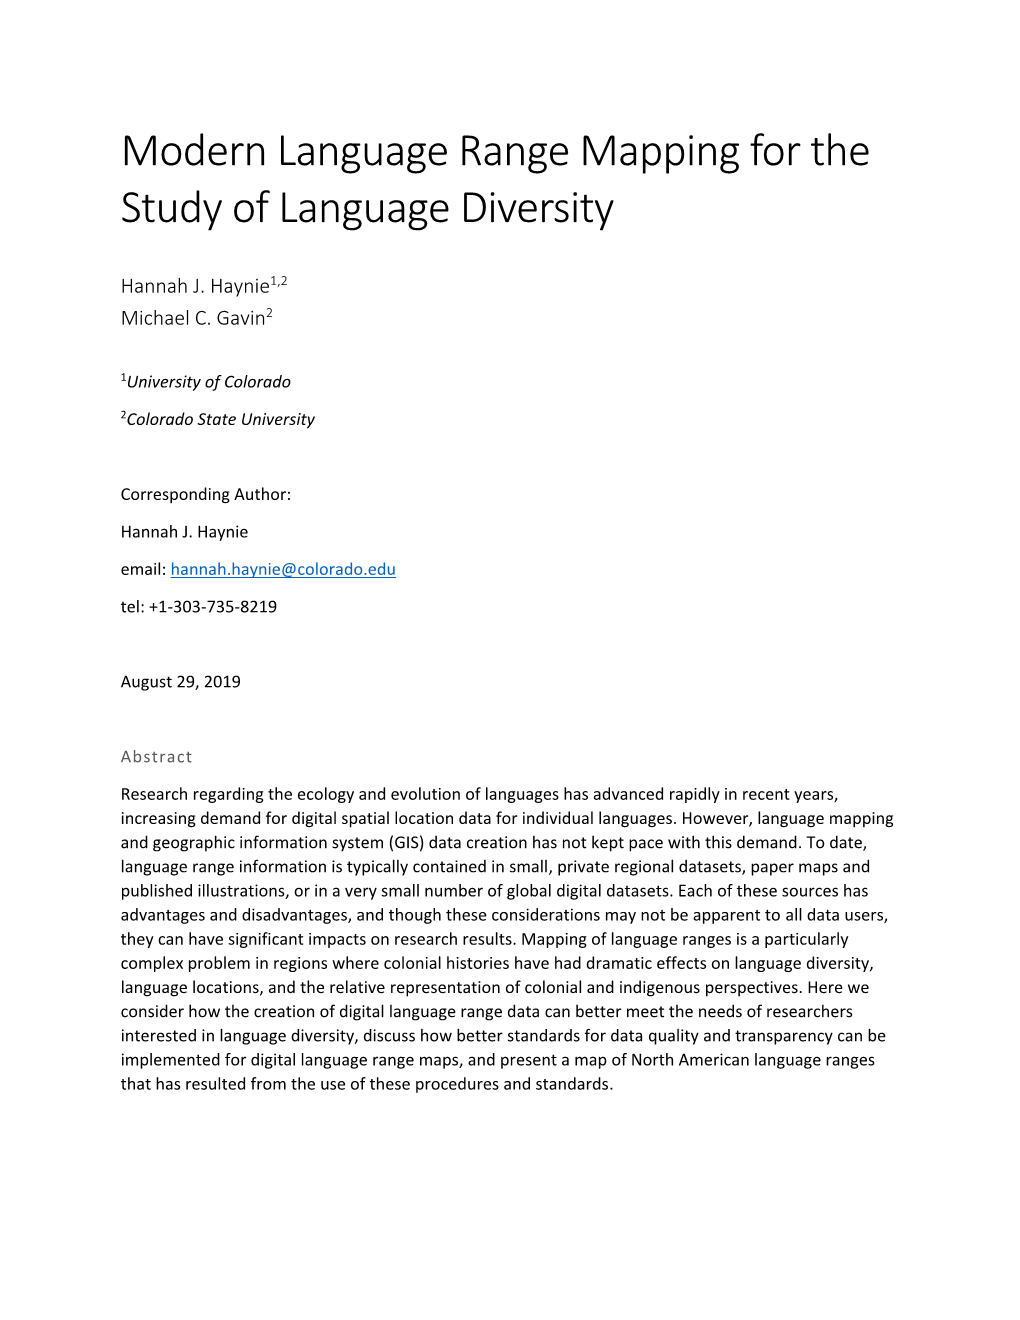 Modern Language Range Mapping for the Study of Language Diversity